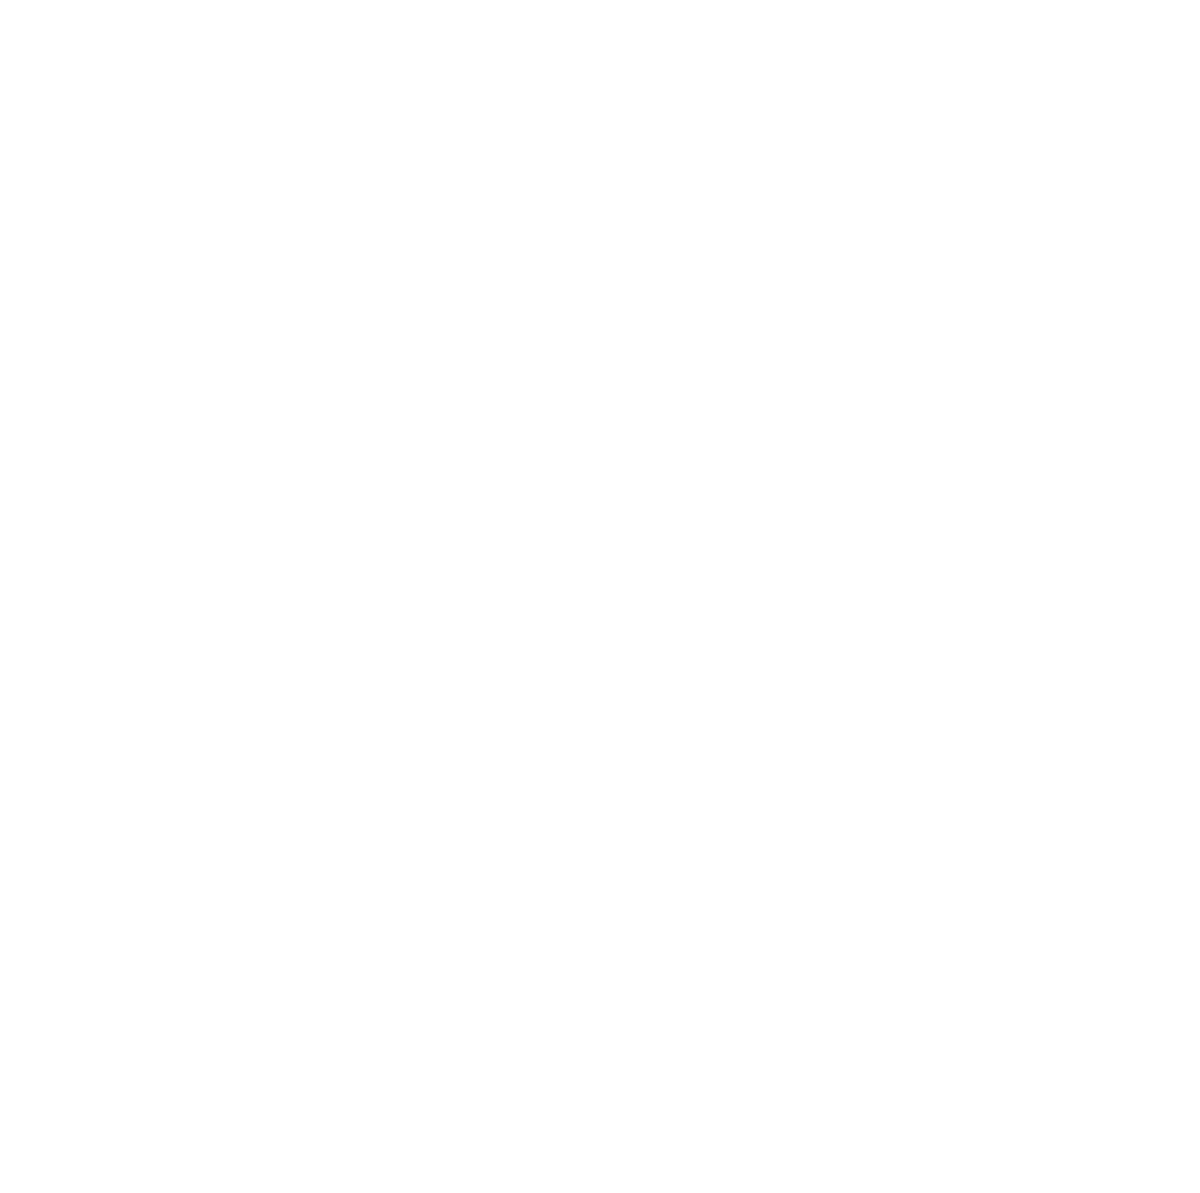 Opera Insurgente